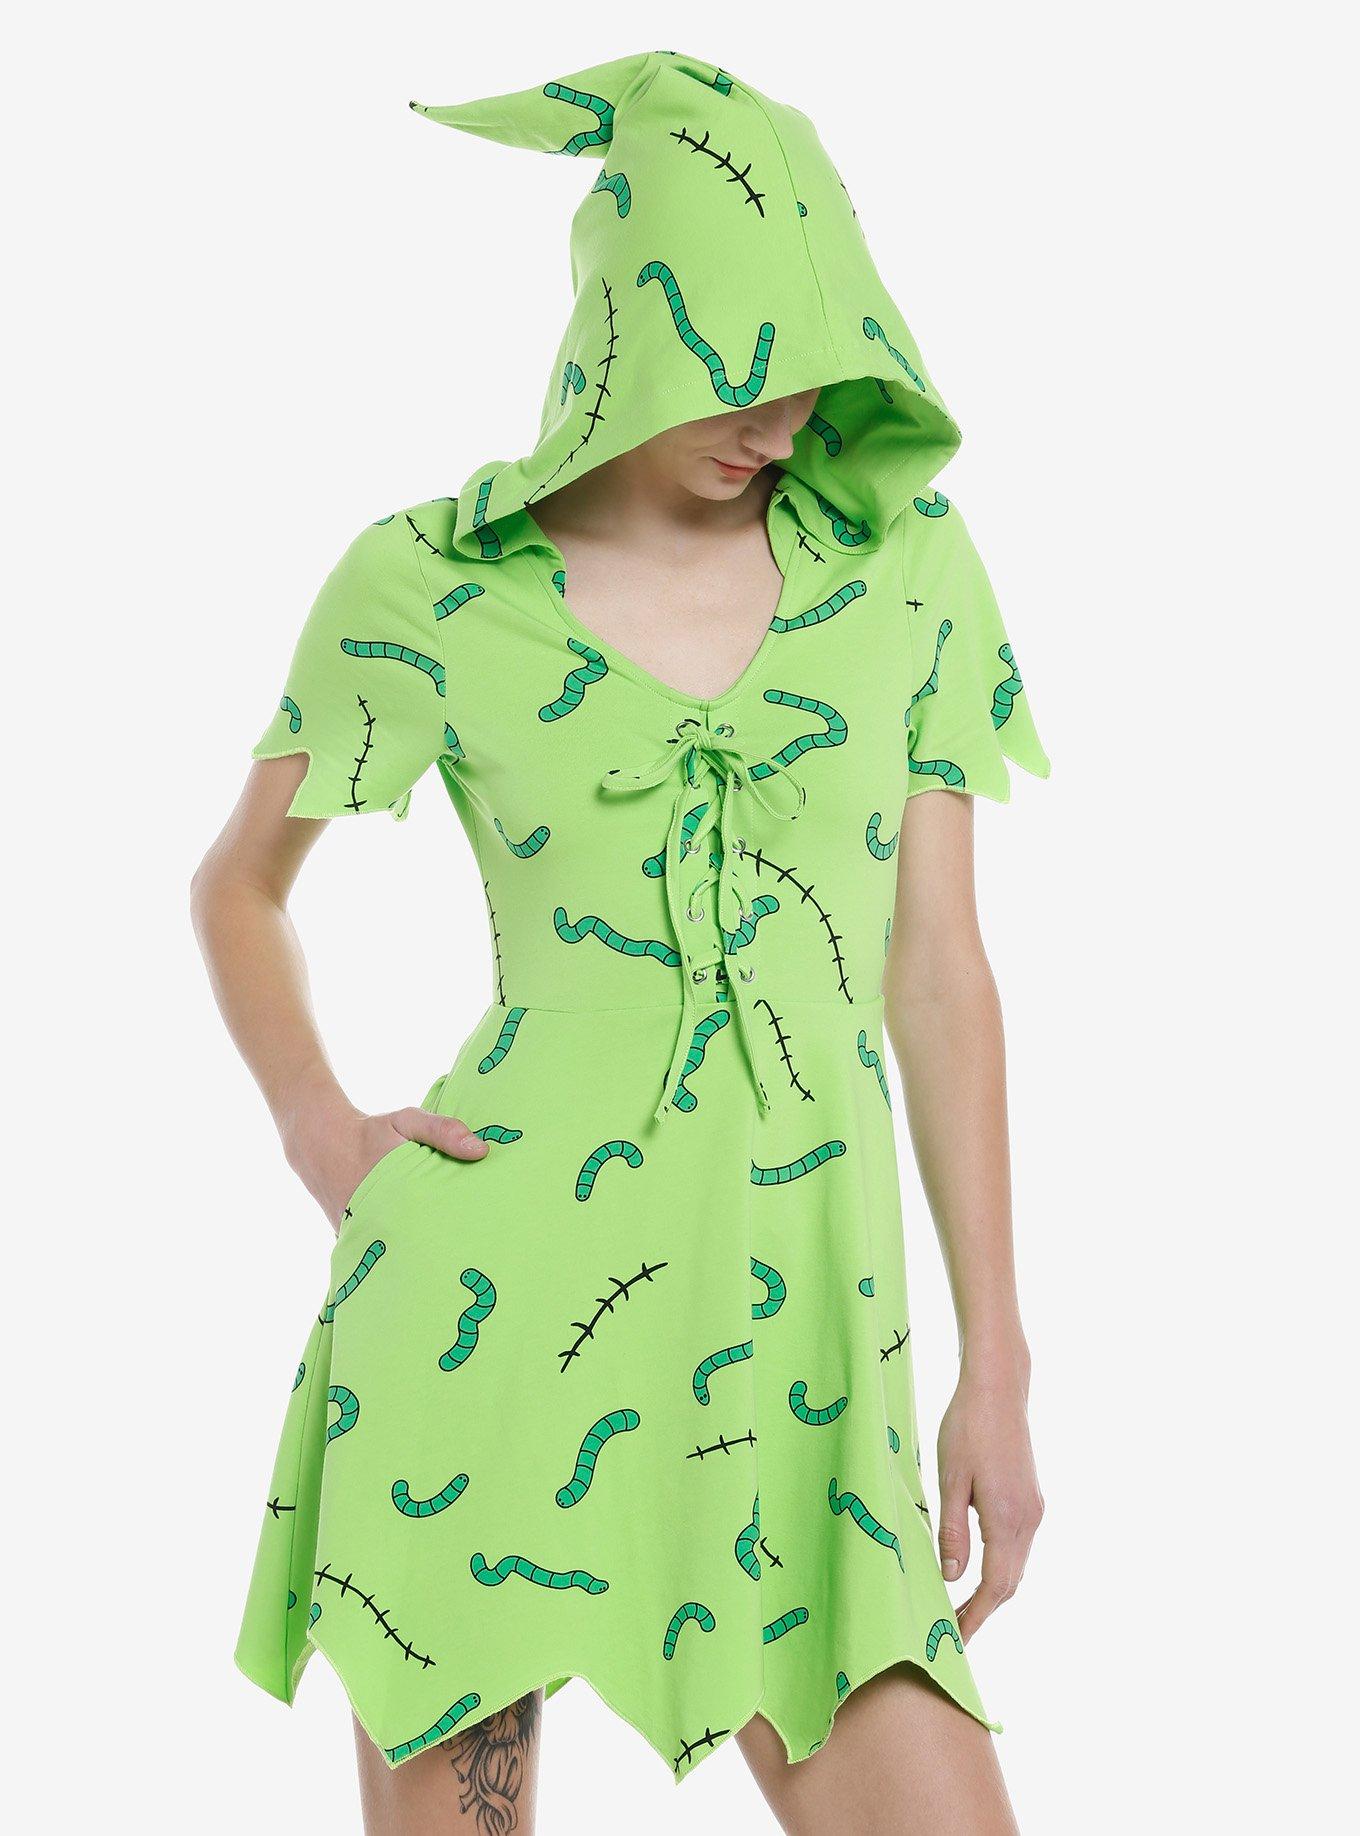 Animated TV Show Burger Cosplay Green Costume Dress (Medium)